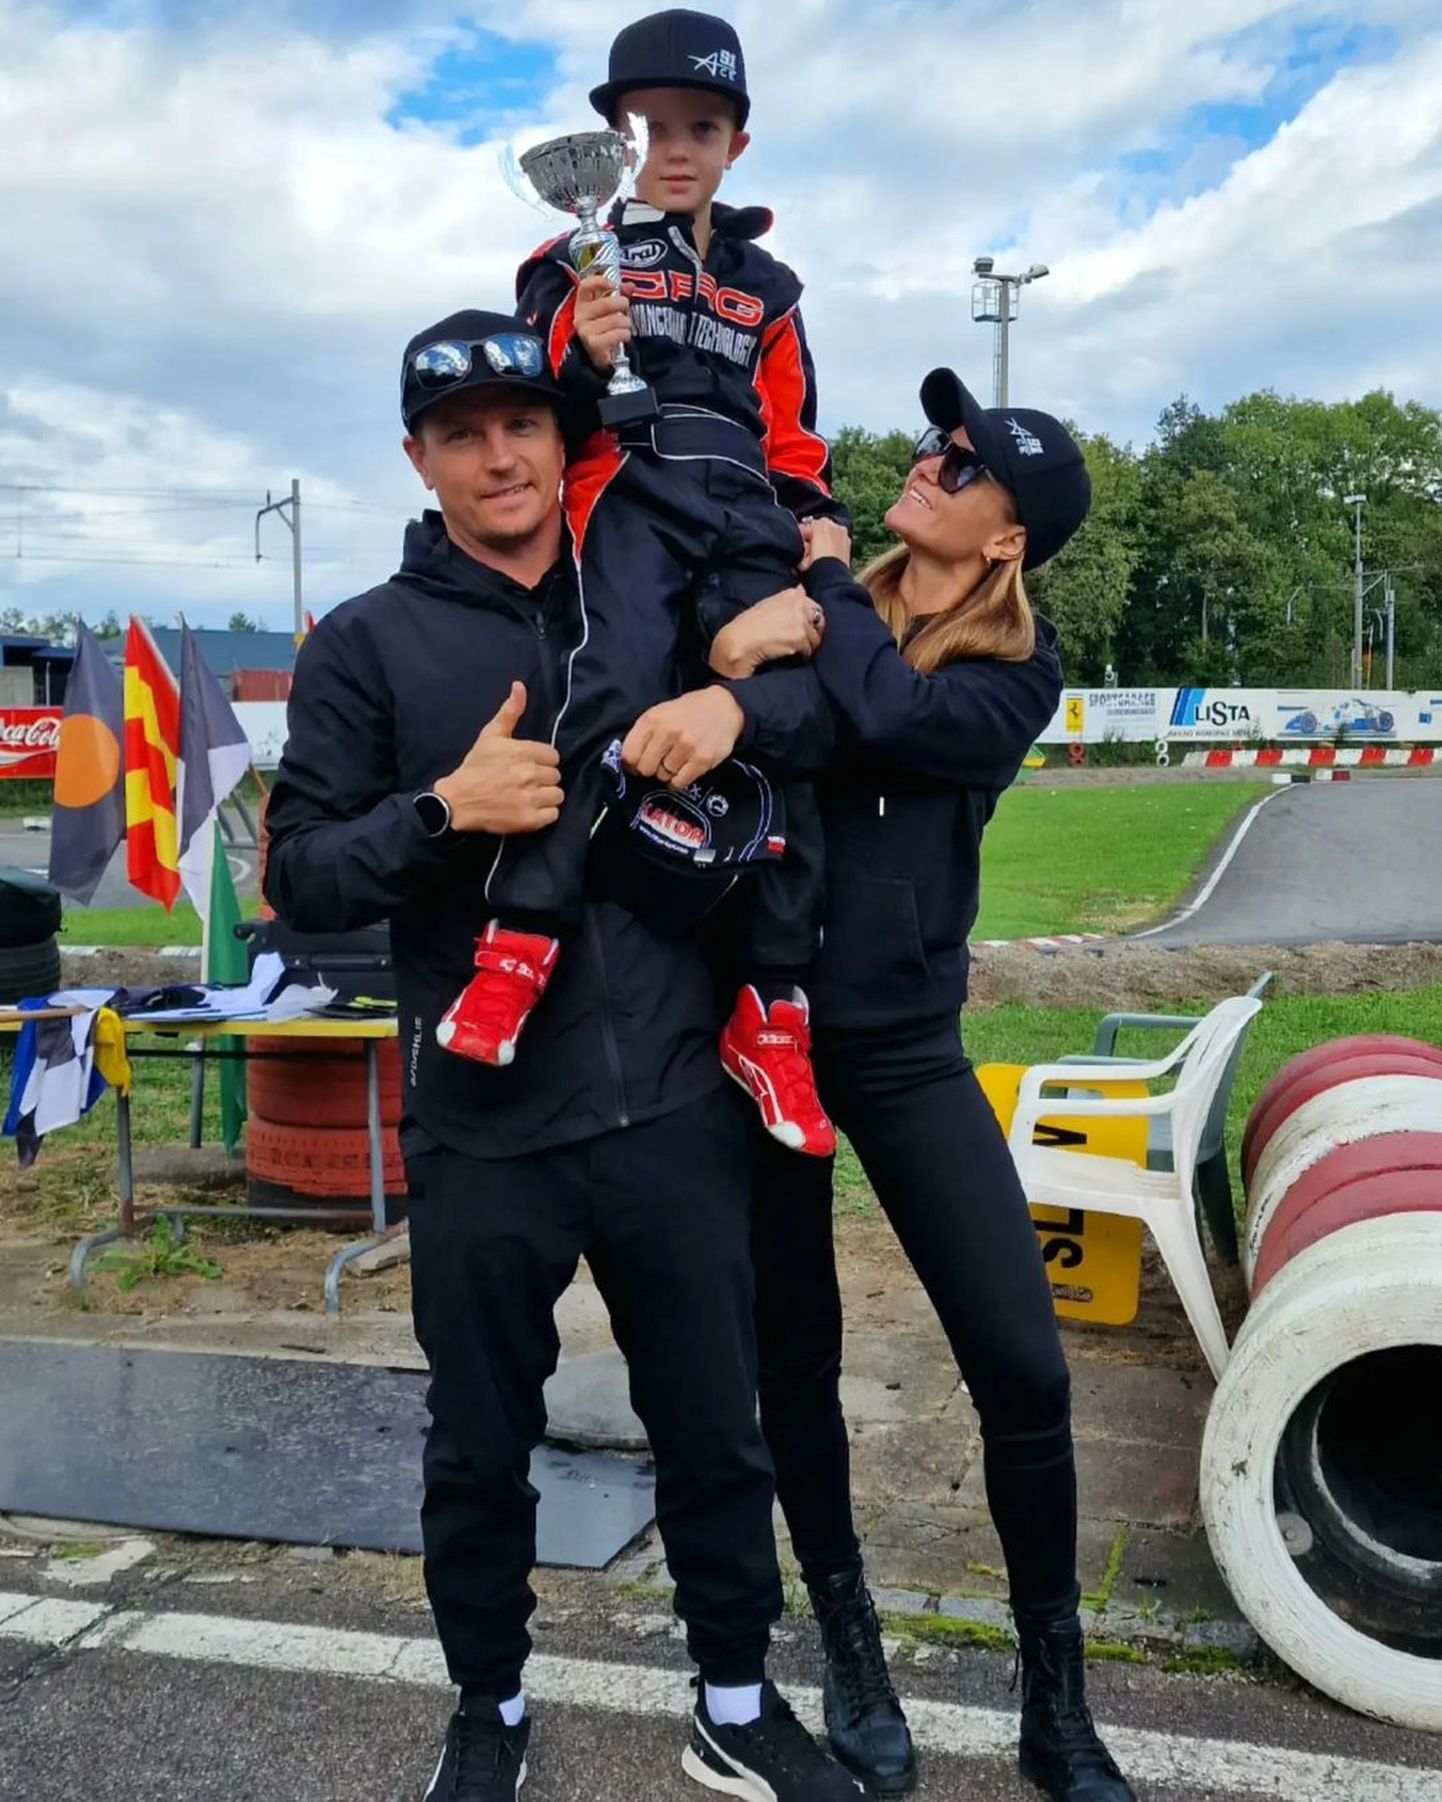 Väike Robin Räikkönen vanemate õlgadel.